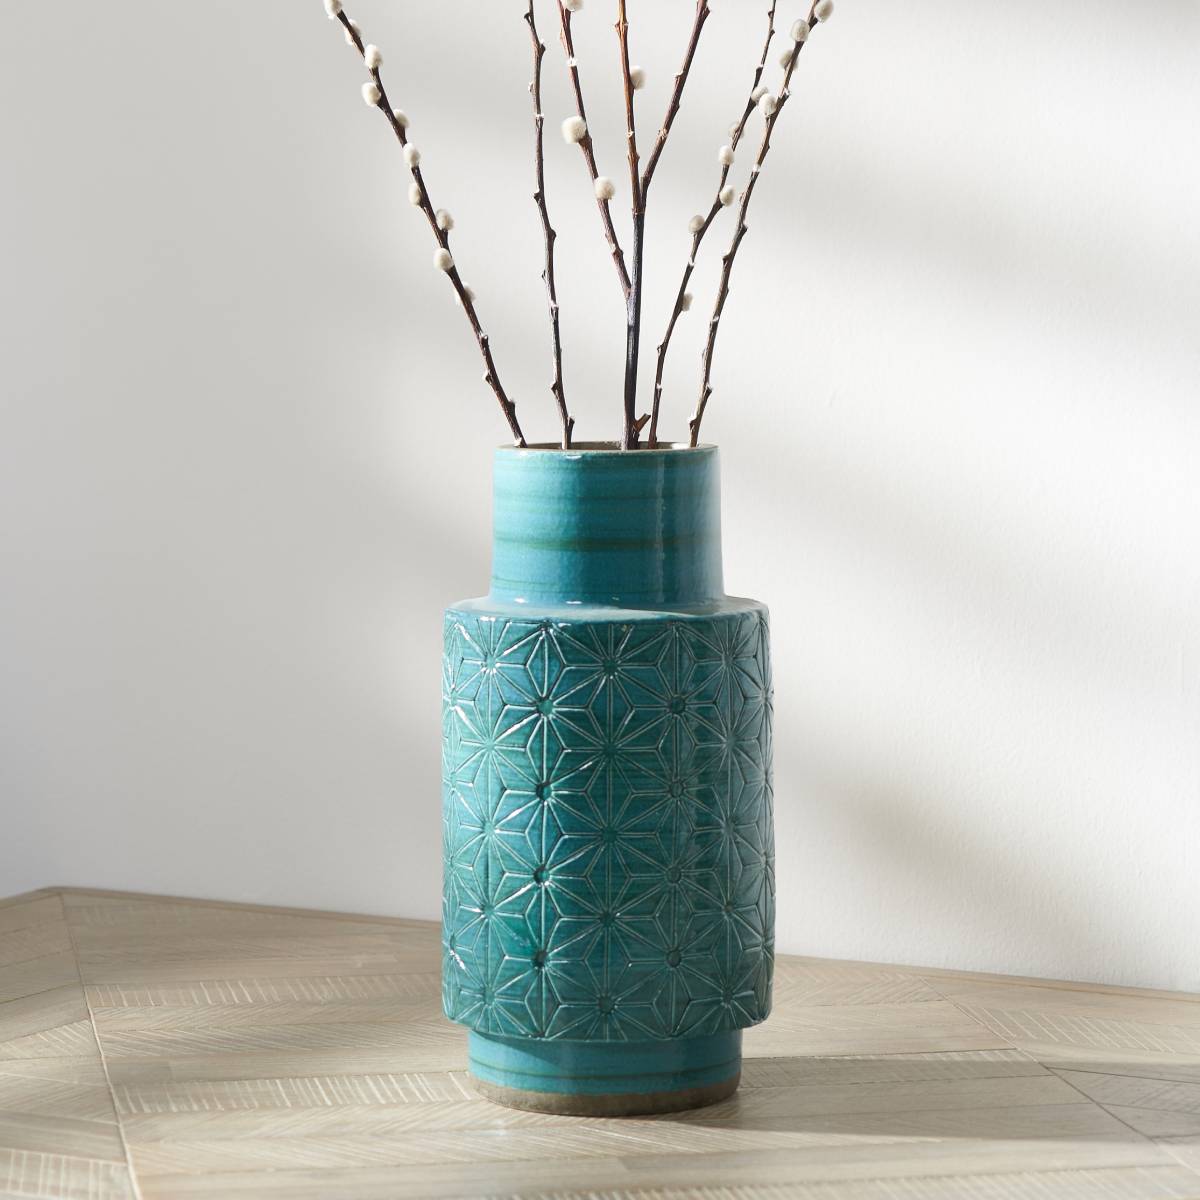 Sidra Aquamarine Stoneware Etch Detail Vase